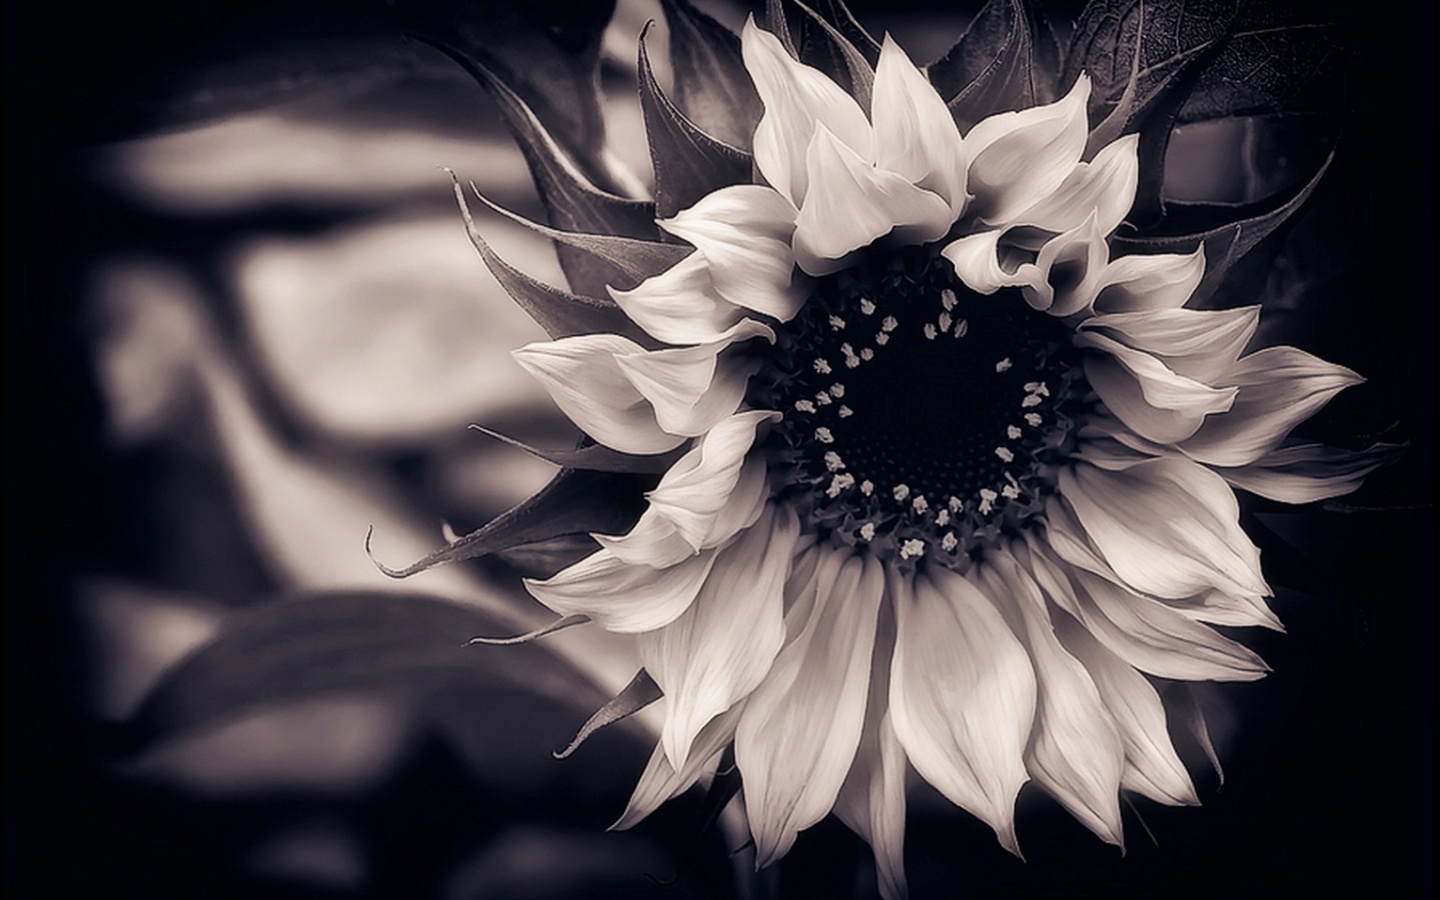 black and white floral wallpaper,monochrome photography,white,black and white,flower,black